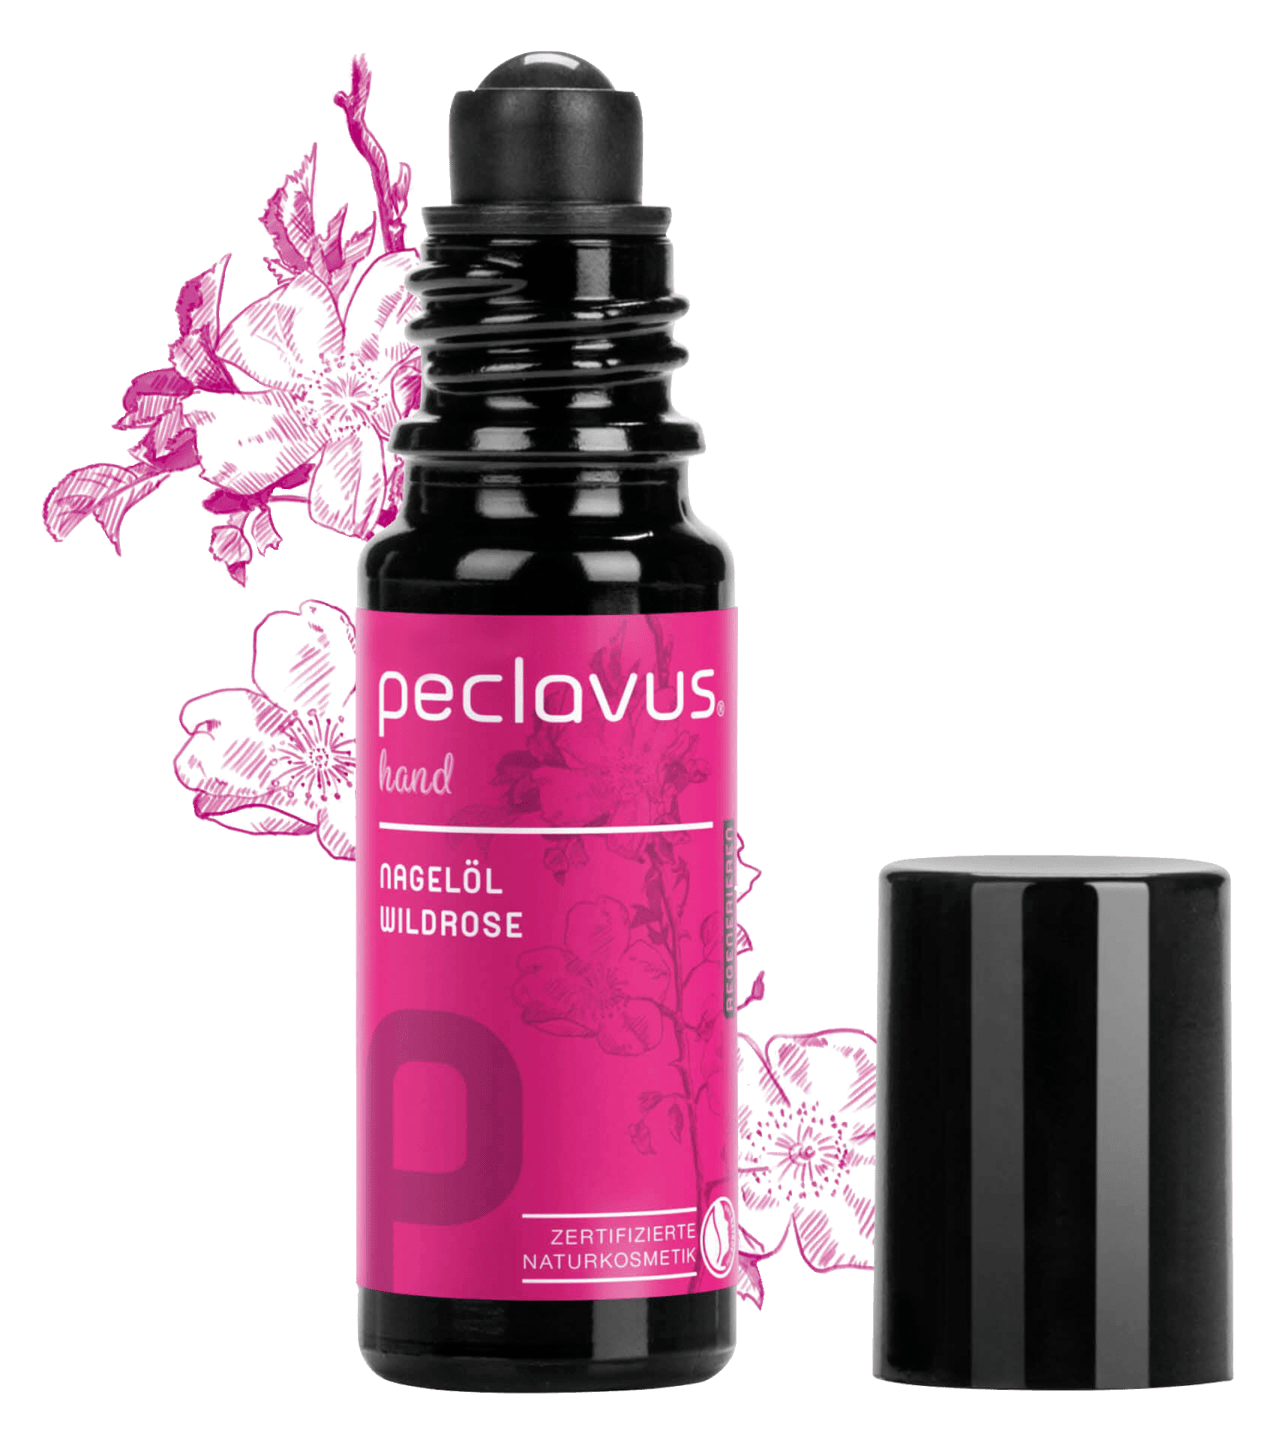 peclavus - Nagelöl Wildrose | Regenerieren, 10 ml